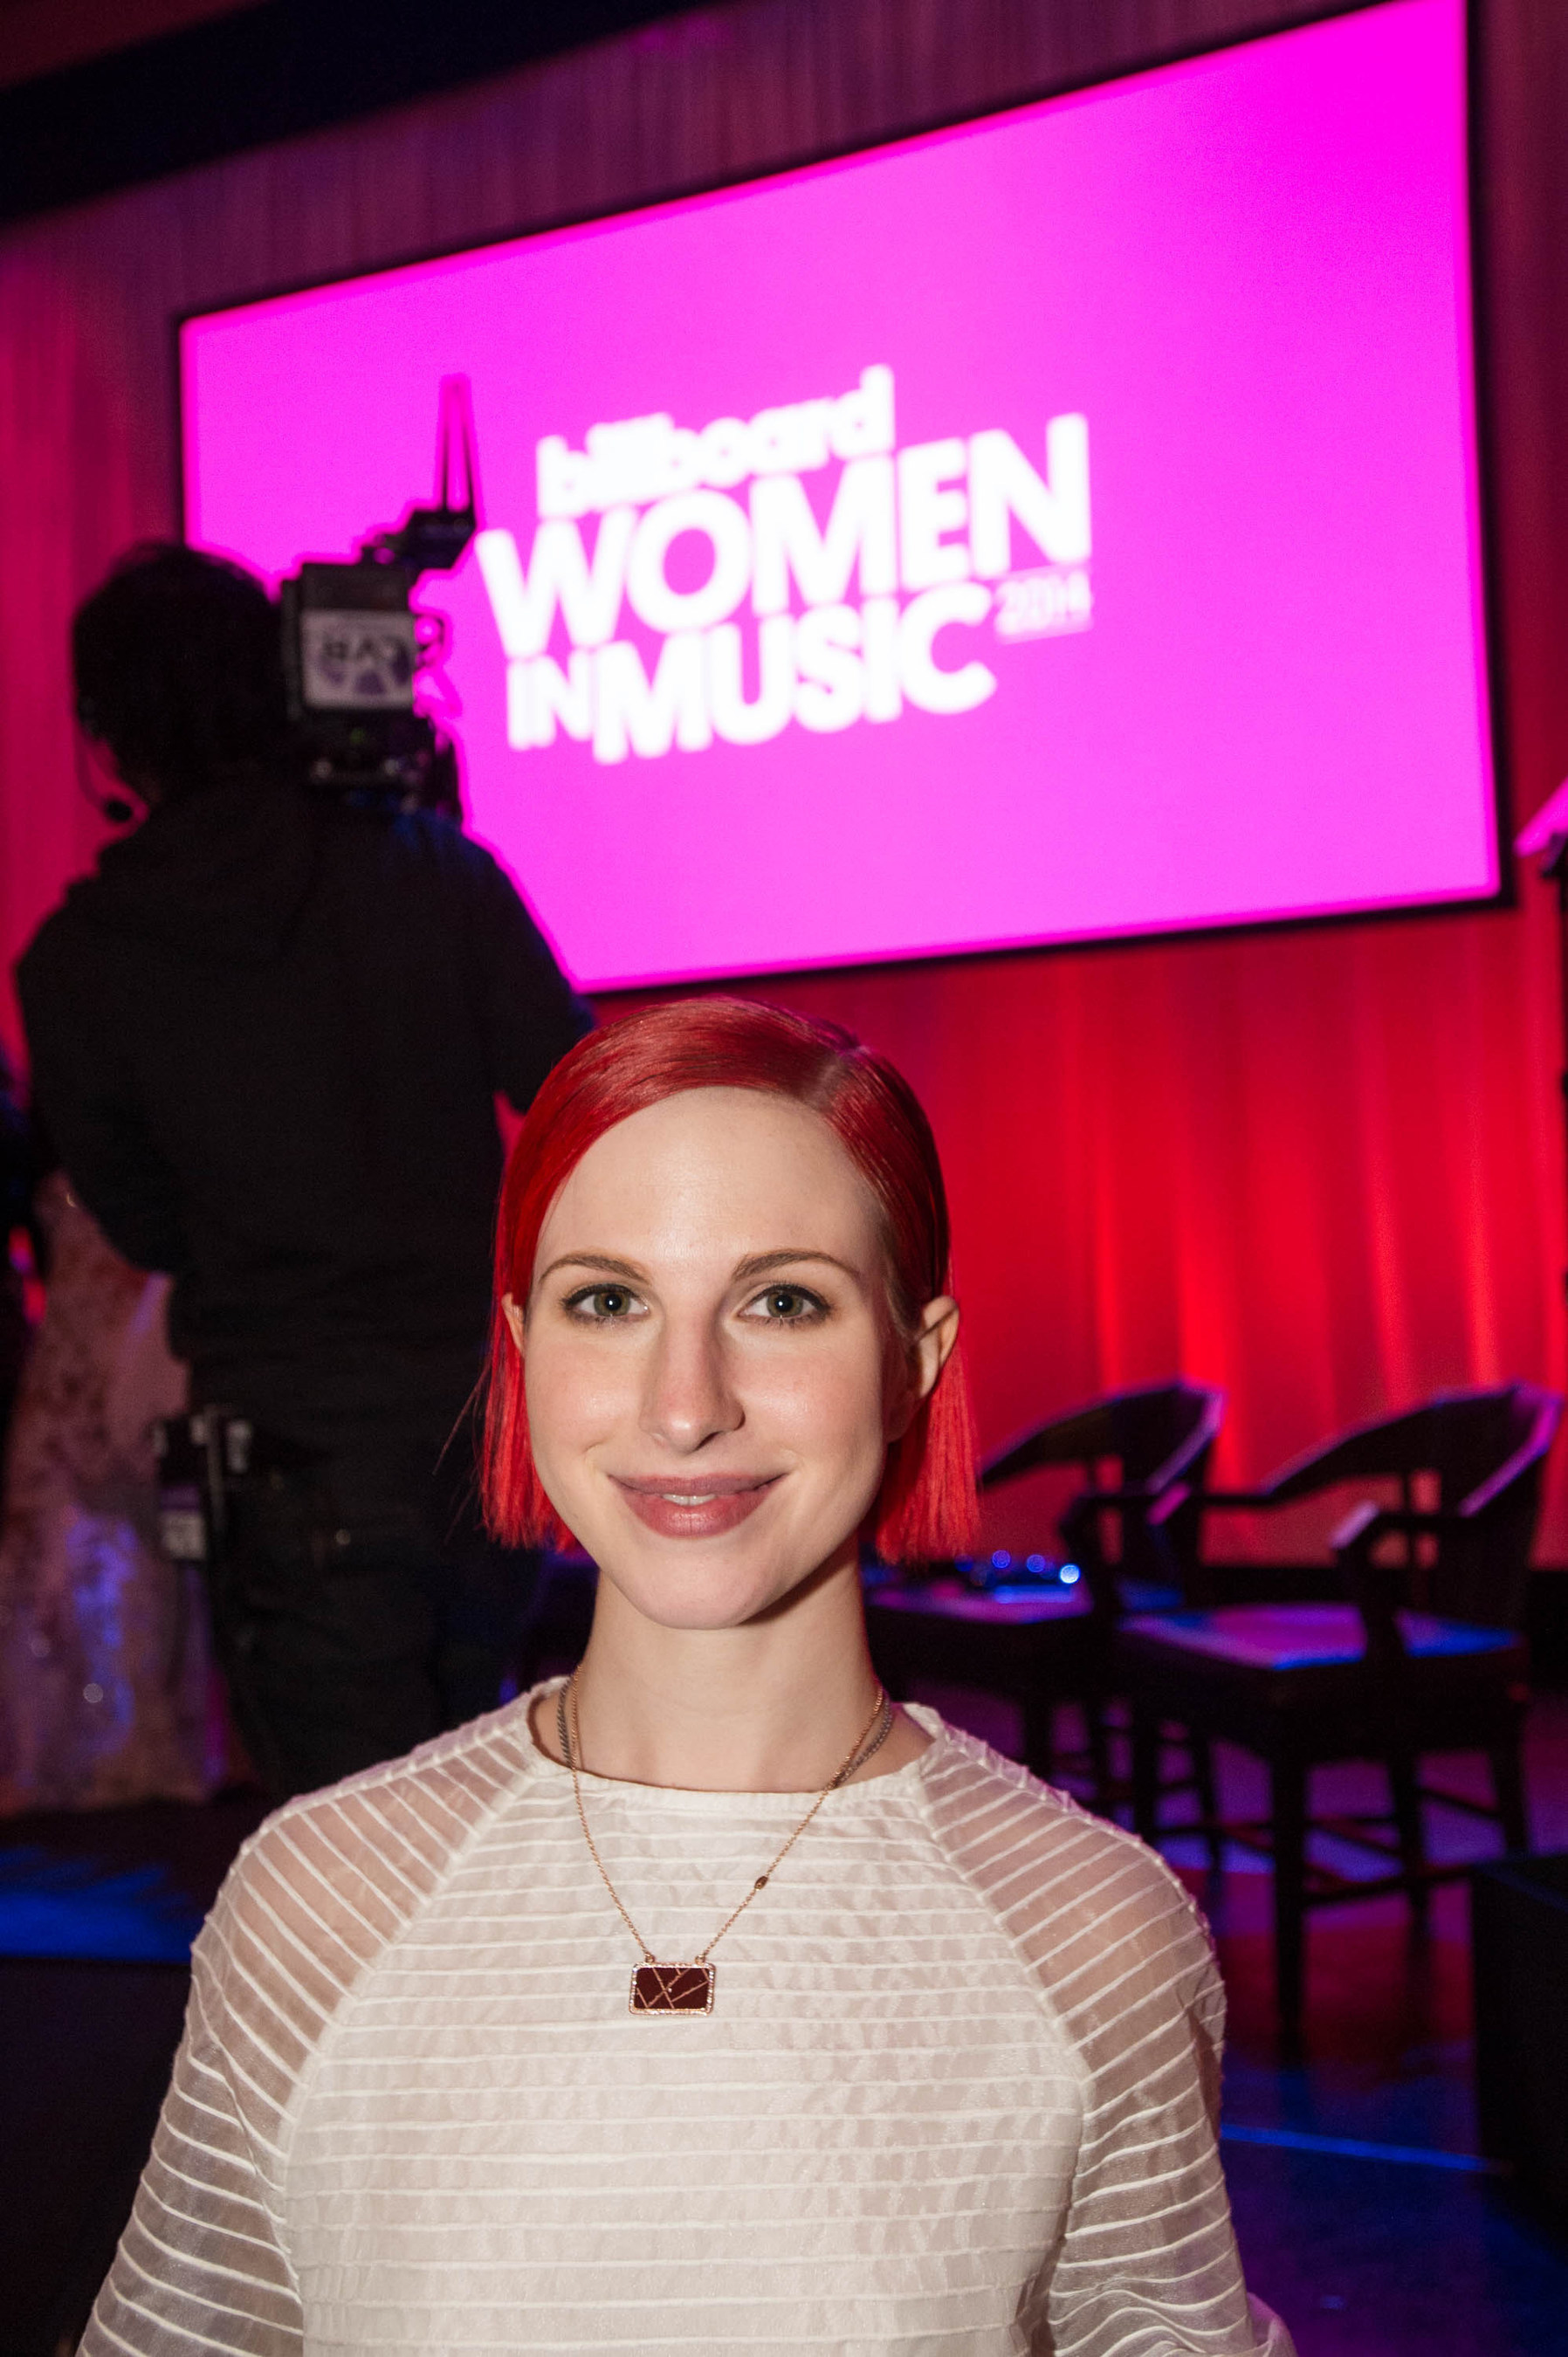 Hayley Williams wearing Maps pendant at Billboard Women in Music Awards.